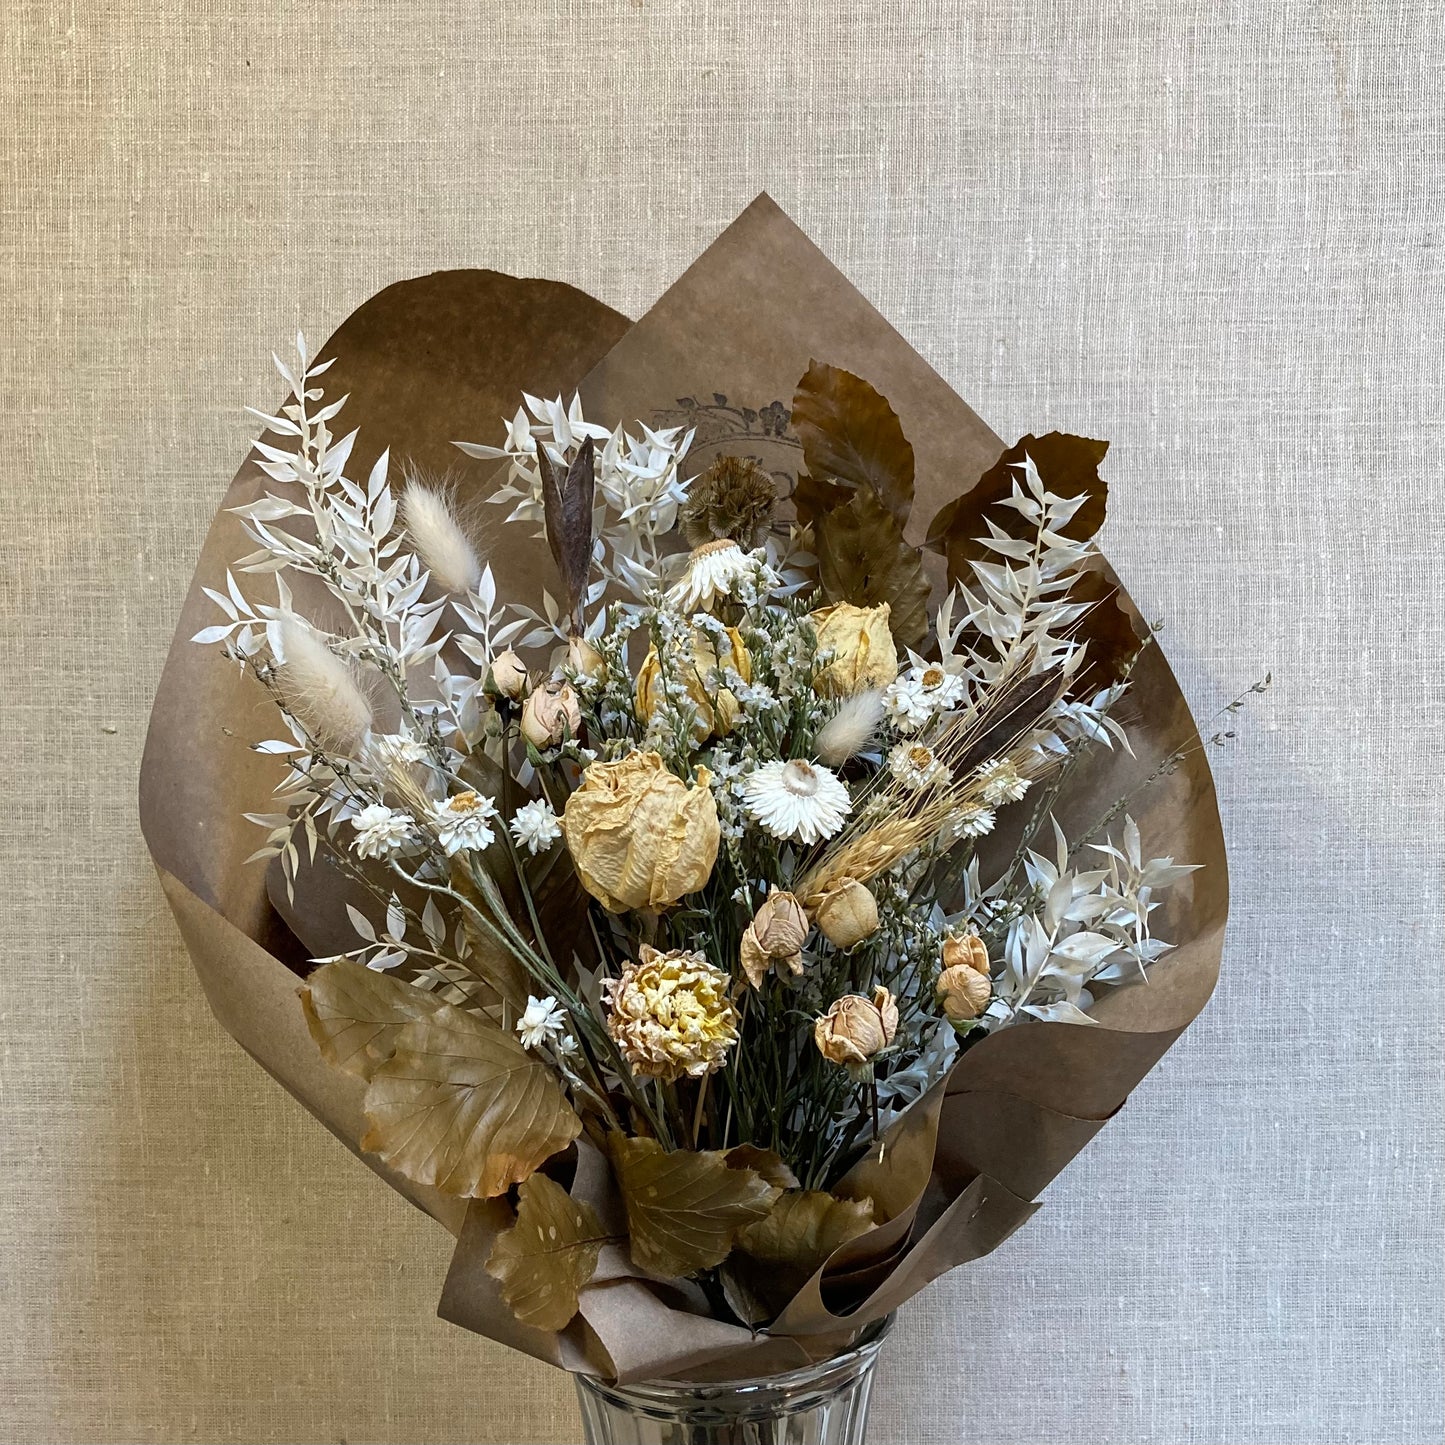 I FIORI Dried Everlasting Bouquet - Elegant Neutral Palette